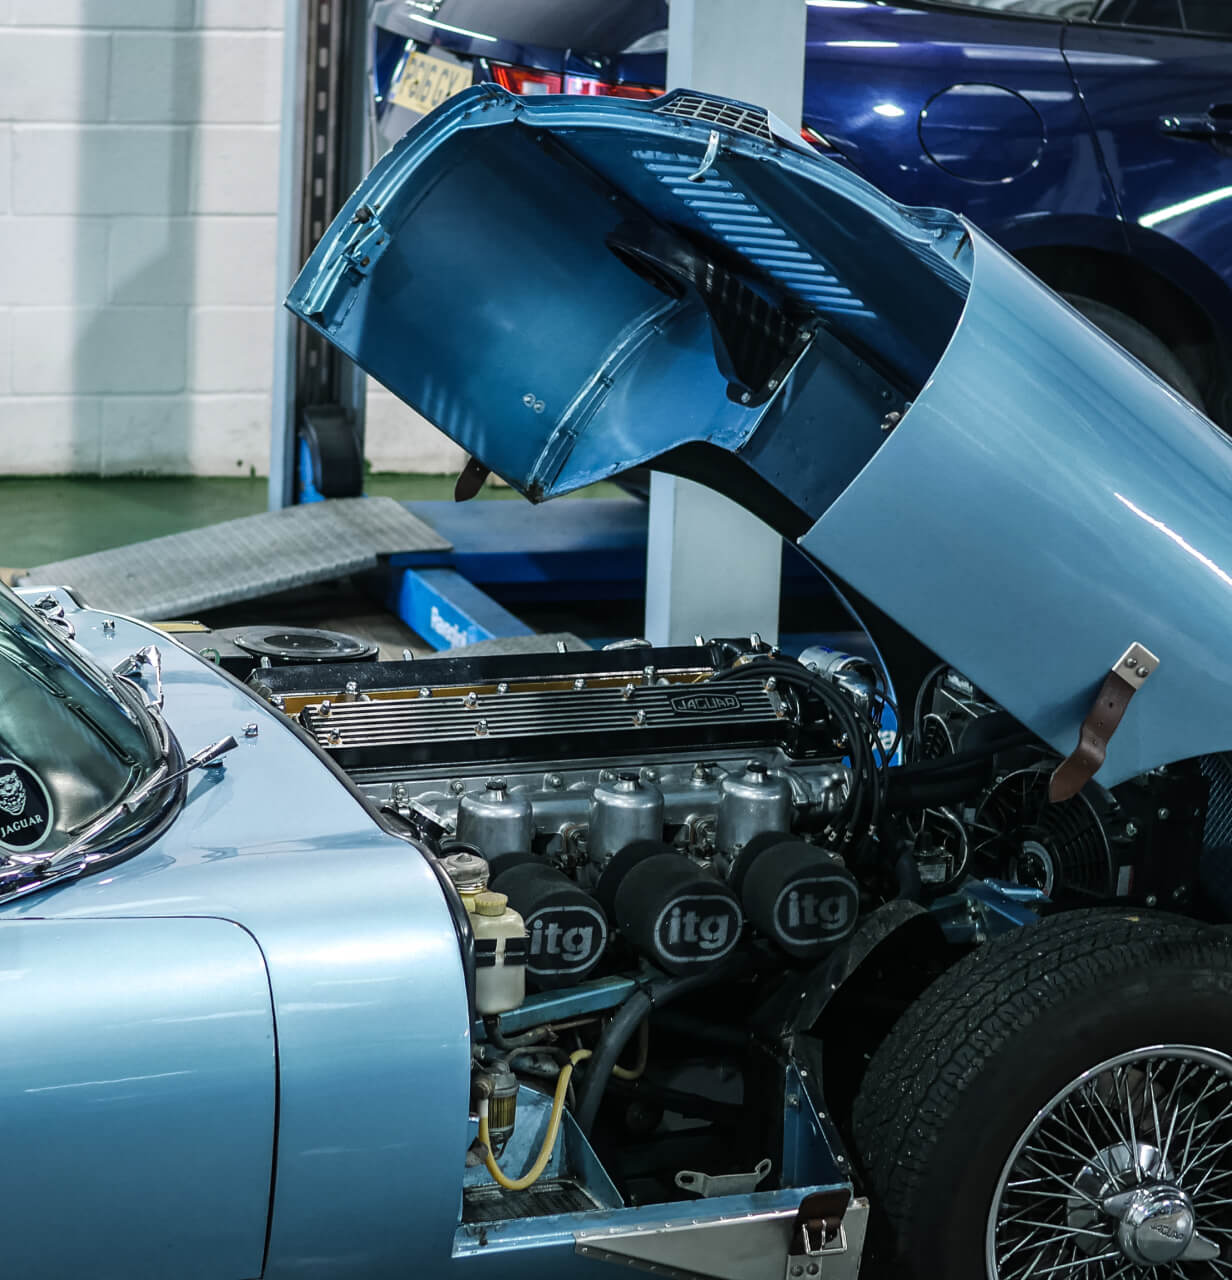 Metallic blue Jaguar E-Type in garage with hood opened exposing the engine